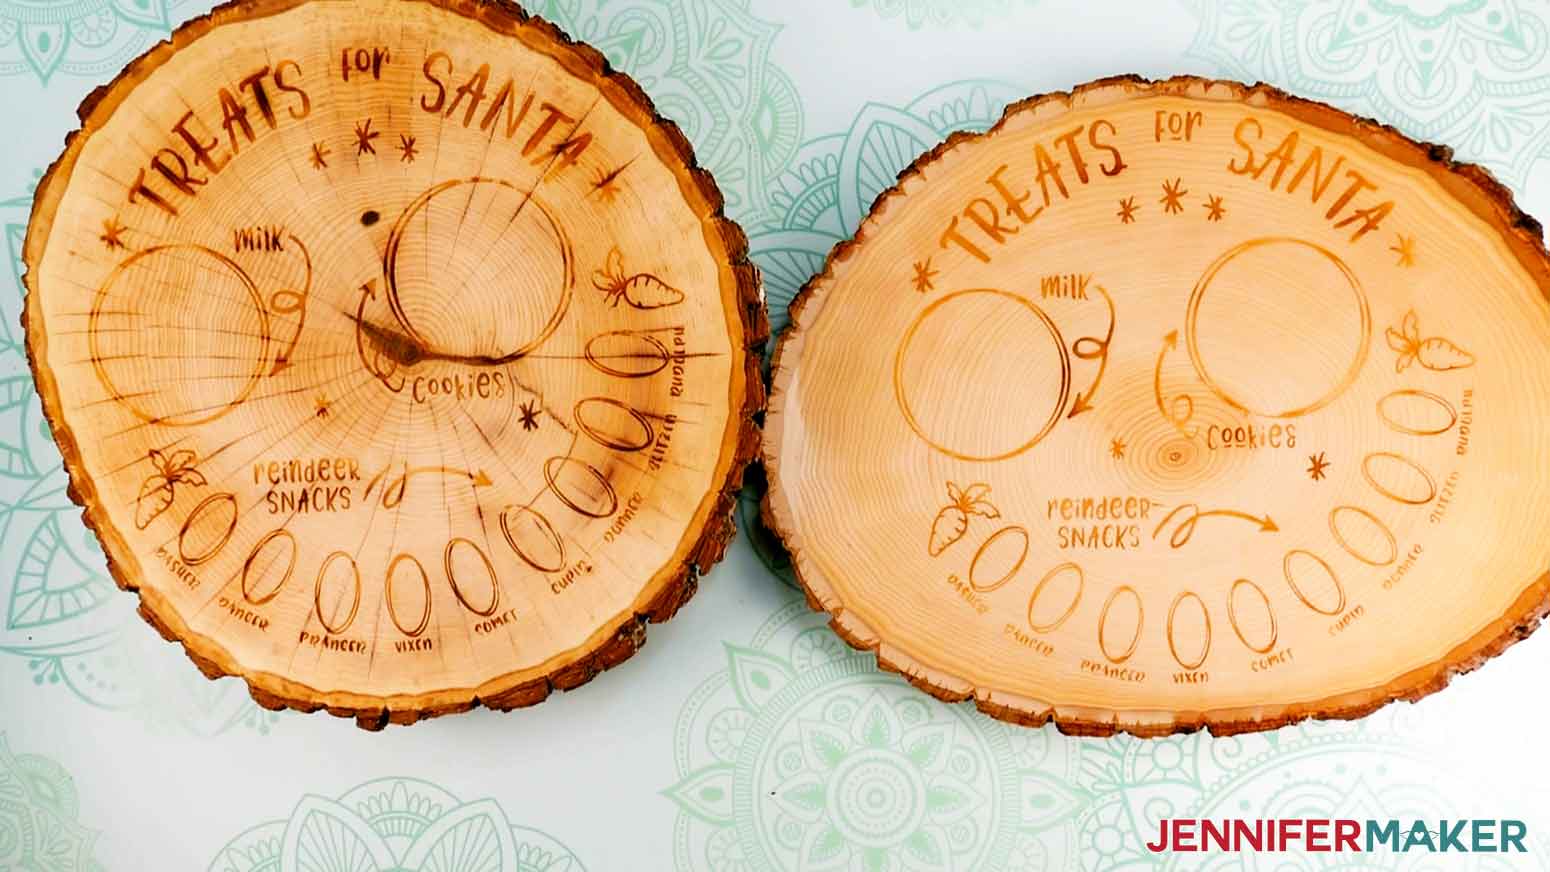 Grain comparison of wood burned design on Santa cookie tray